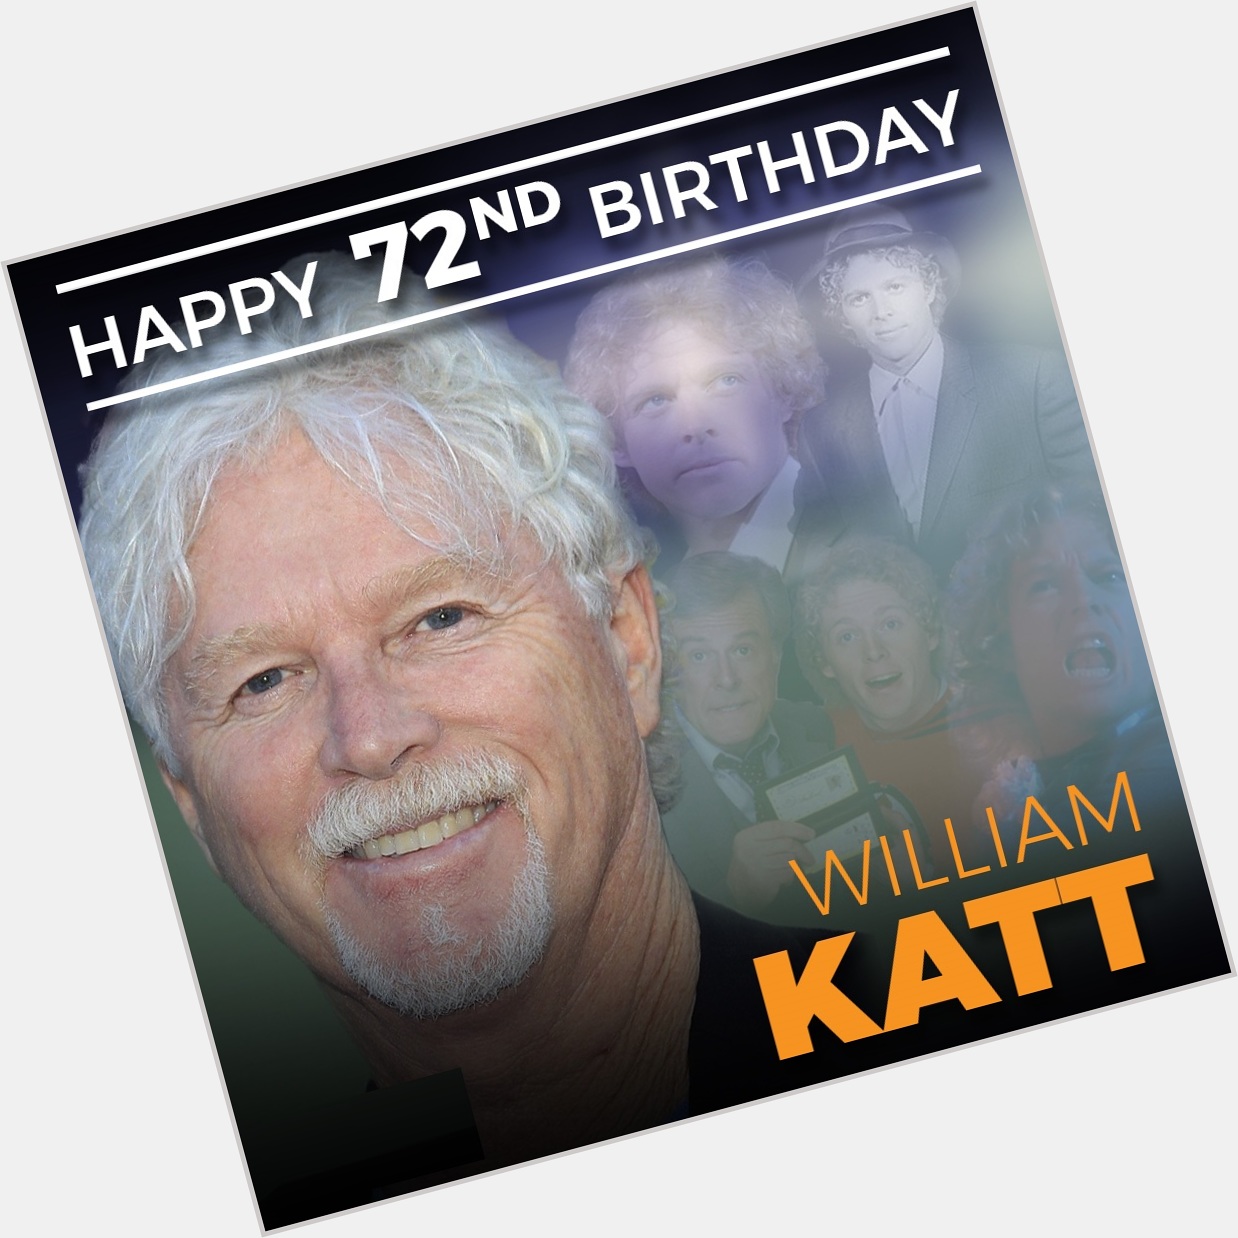 Happy Birthday William Katt! The Movie star and turns 72 today.   